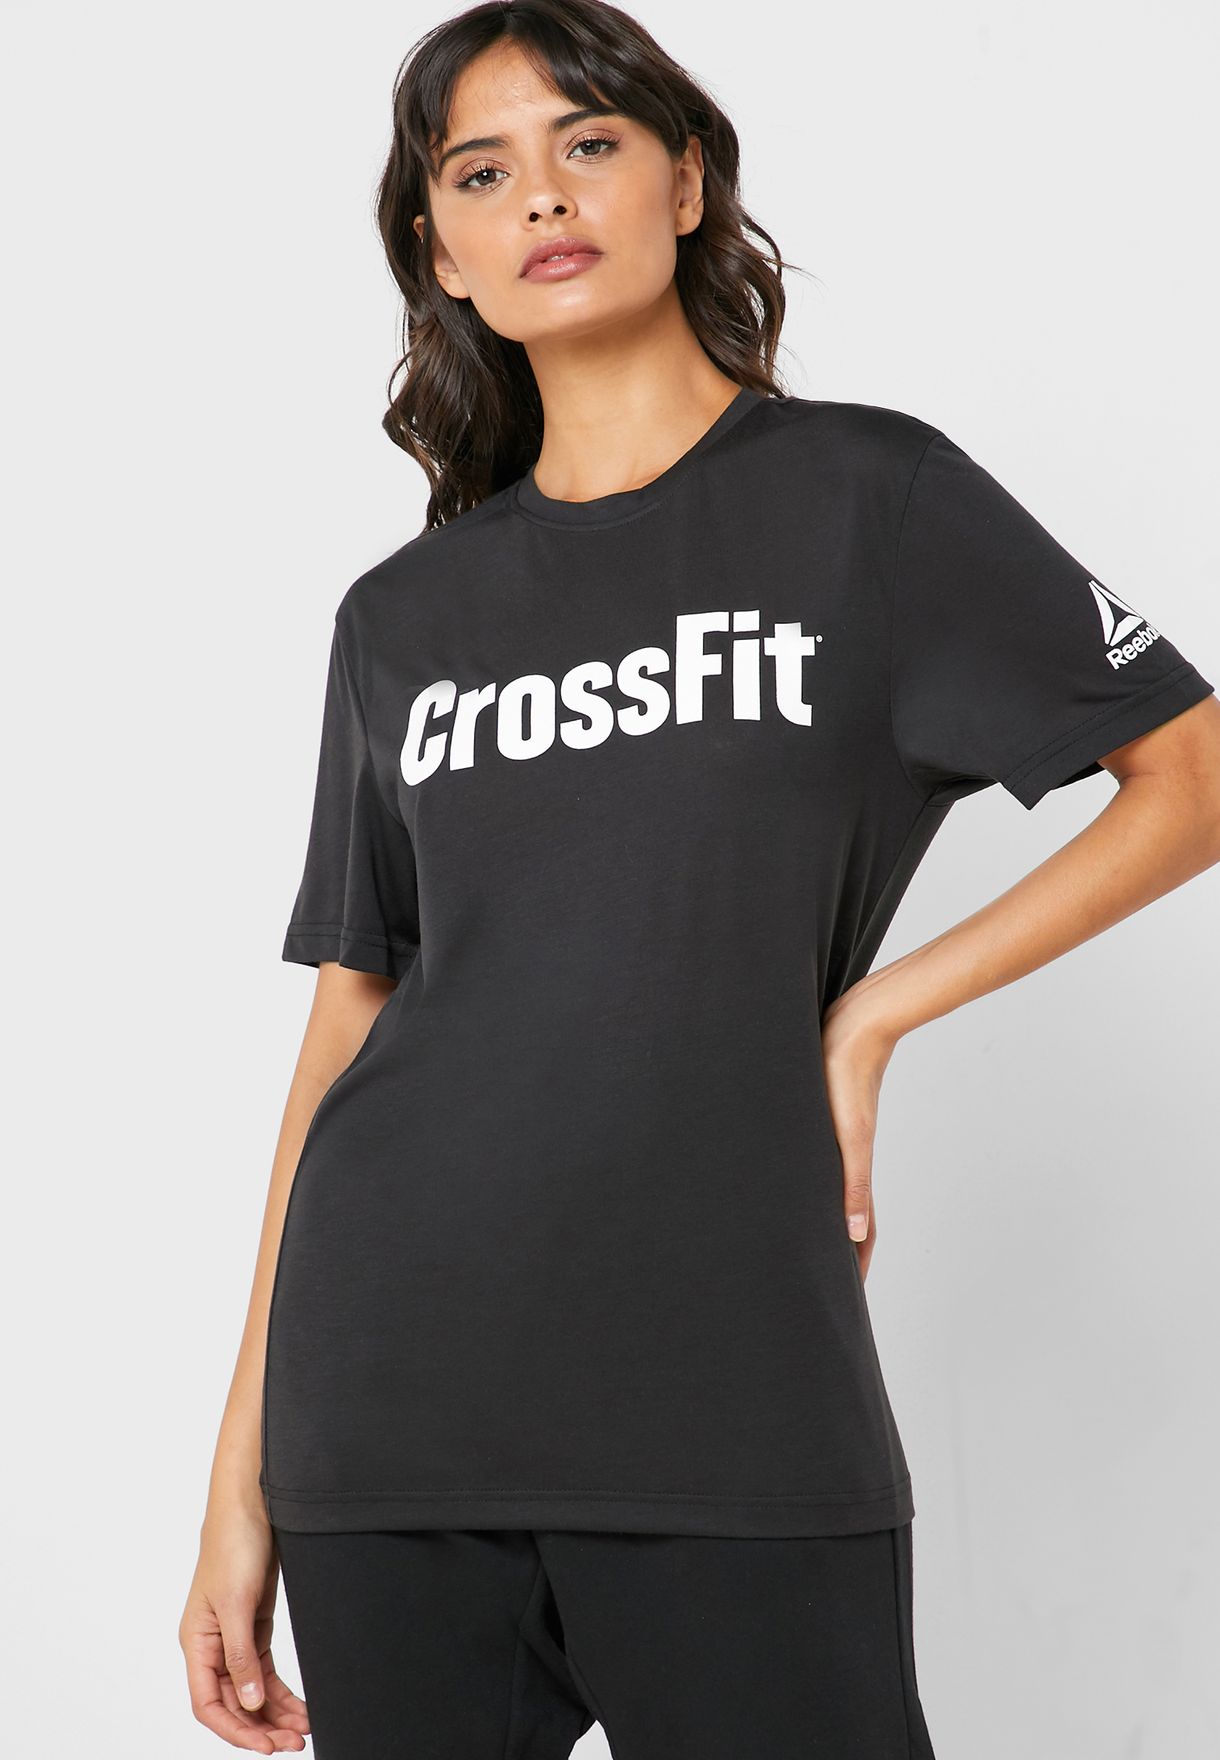 crossfit reebok shirt